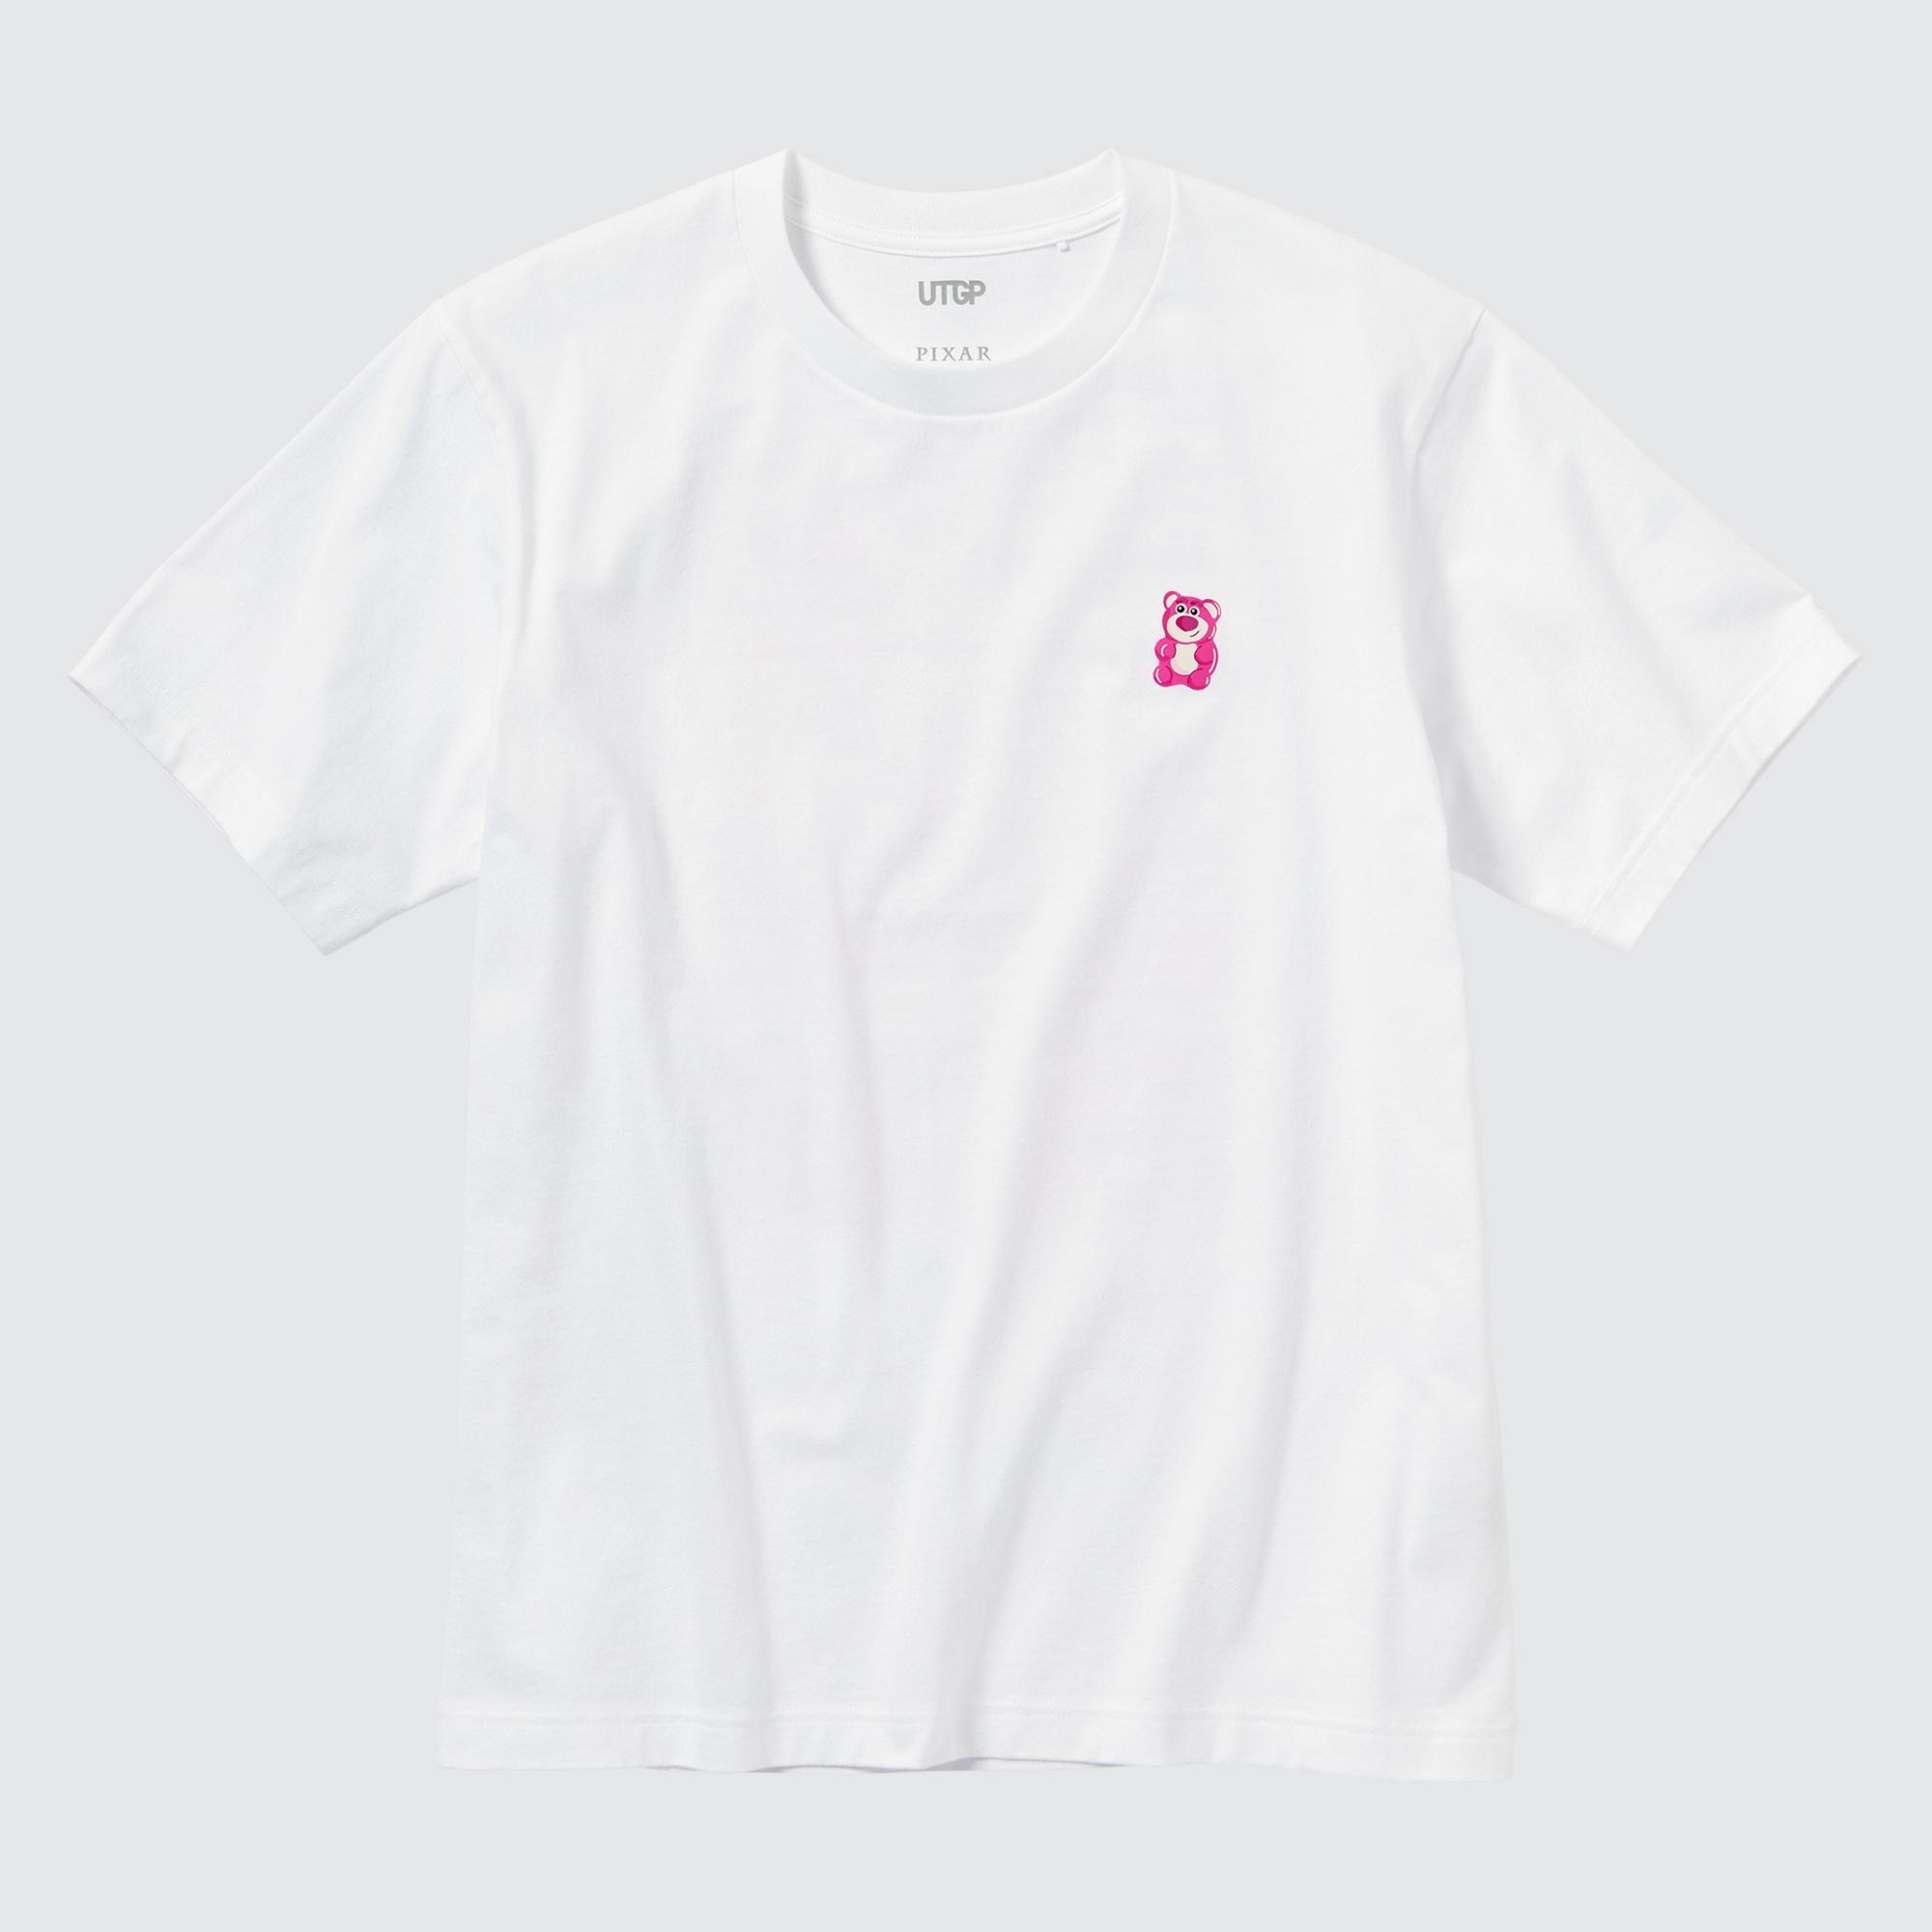 UTGP2023: MAGIC FOR ALL UT (Short-Sleeve Graphic T-Shirt) (Cheng